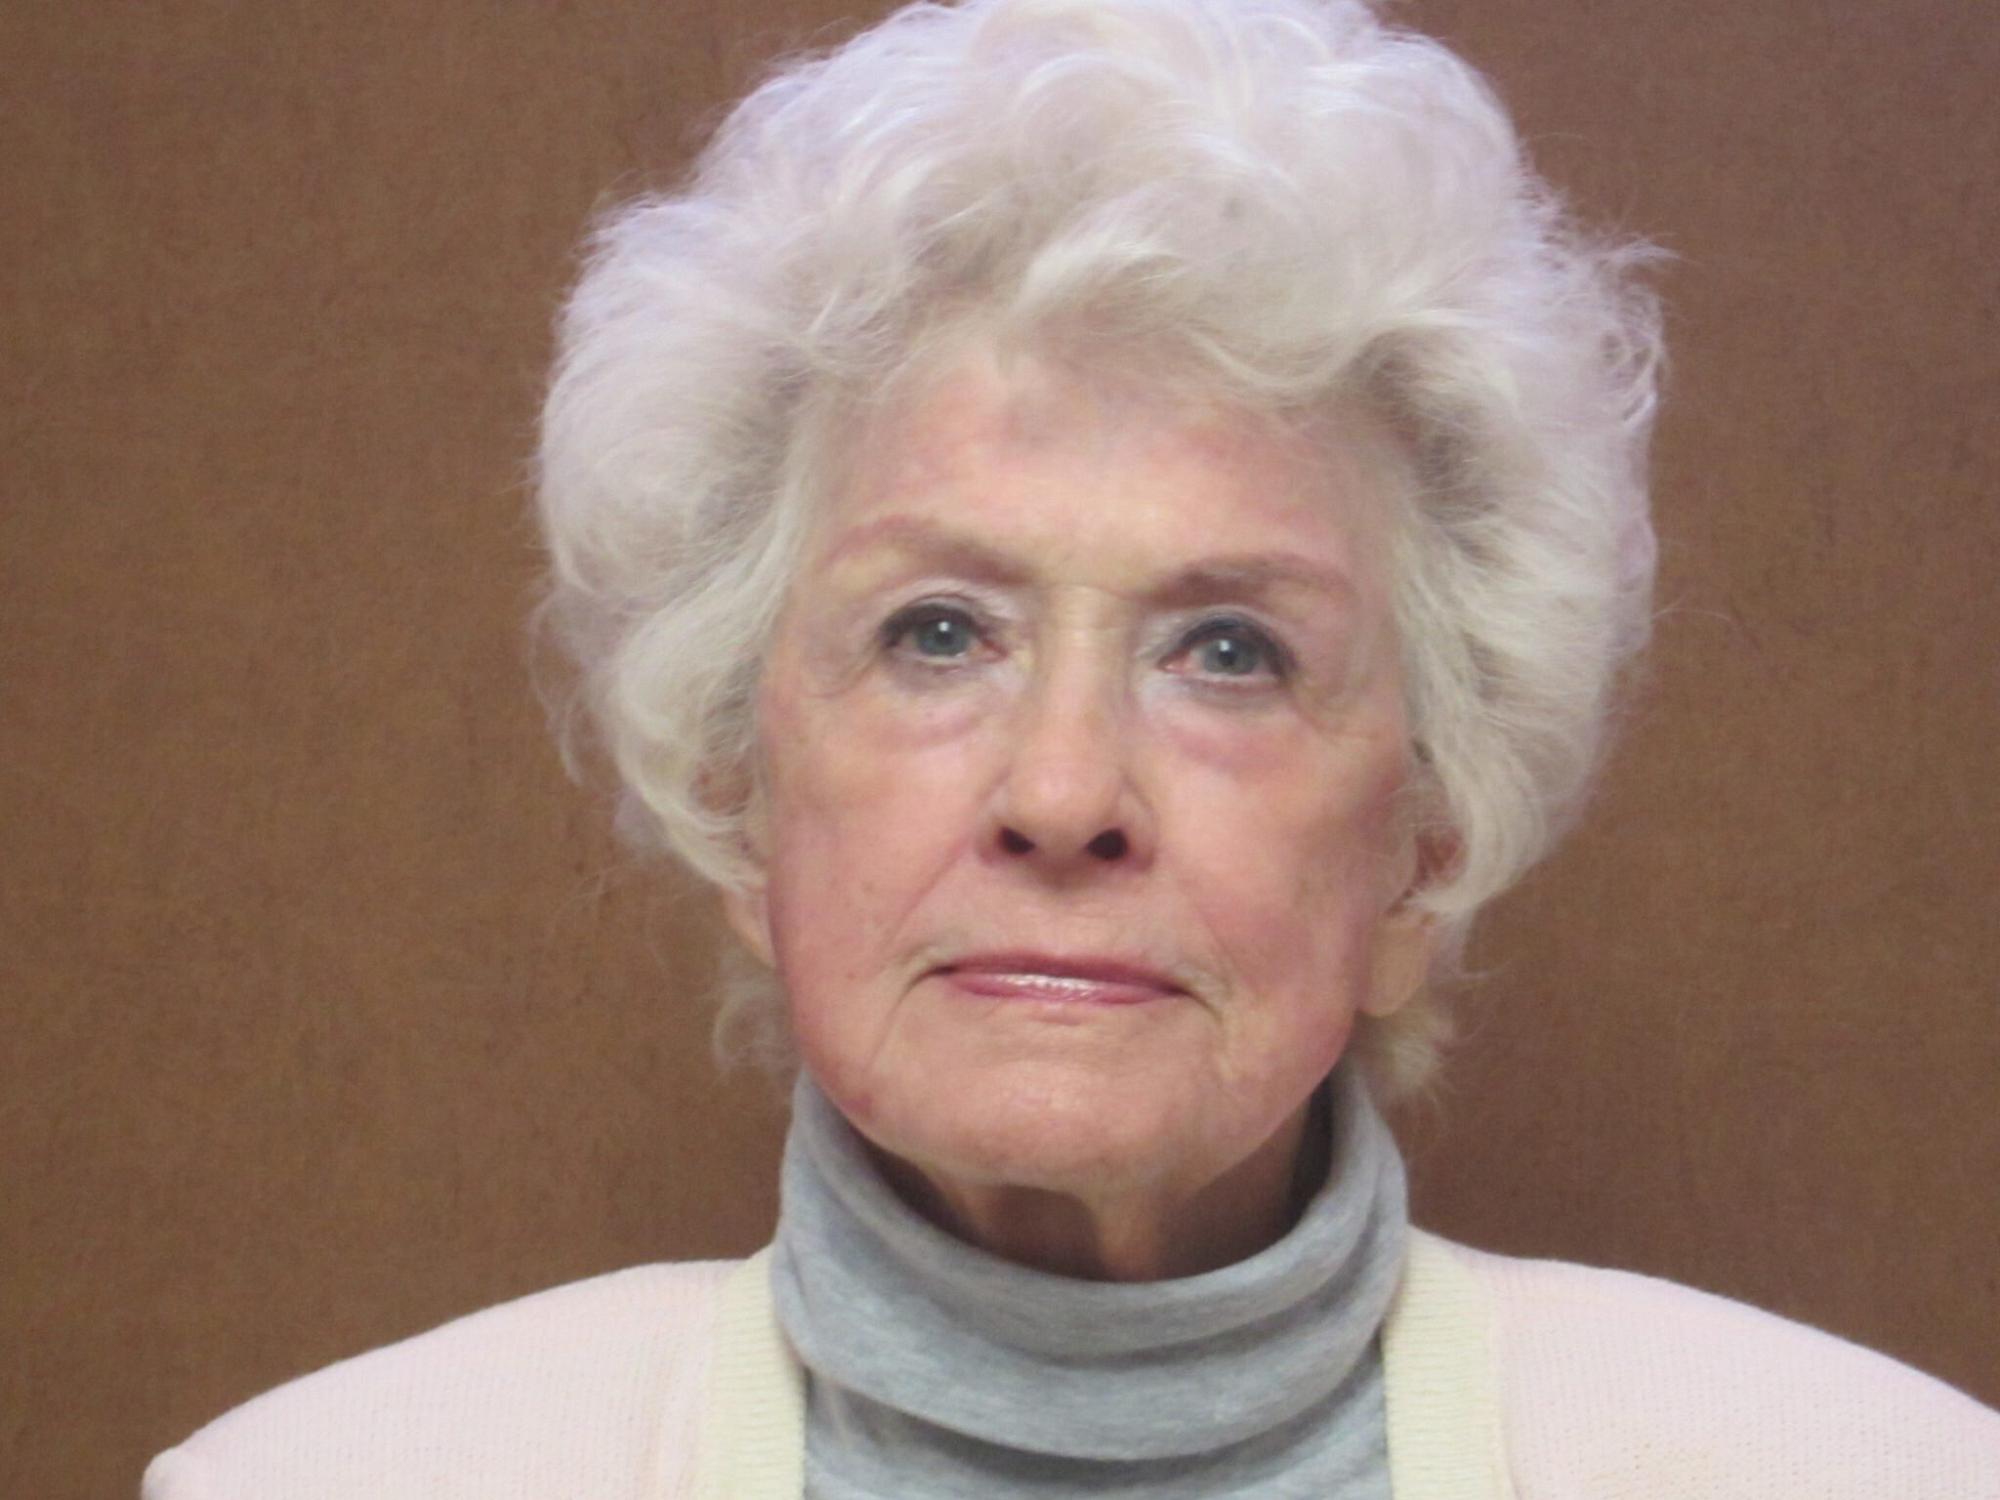 Elder woman's face after collagen treatment